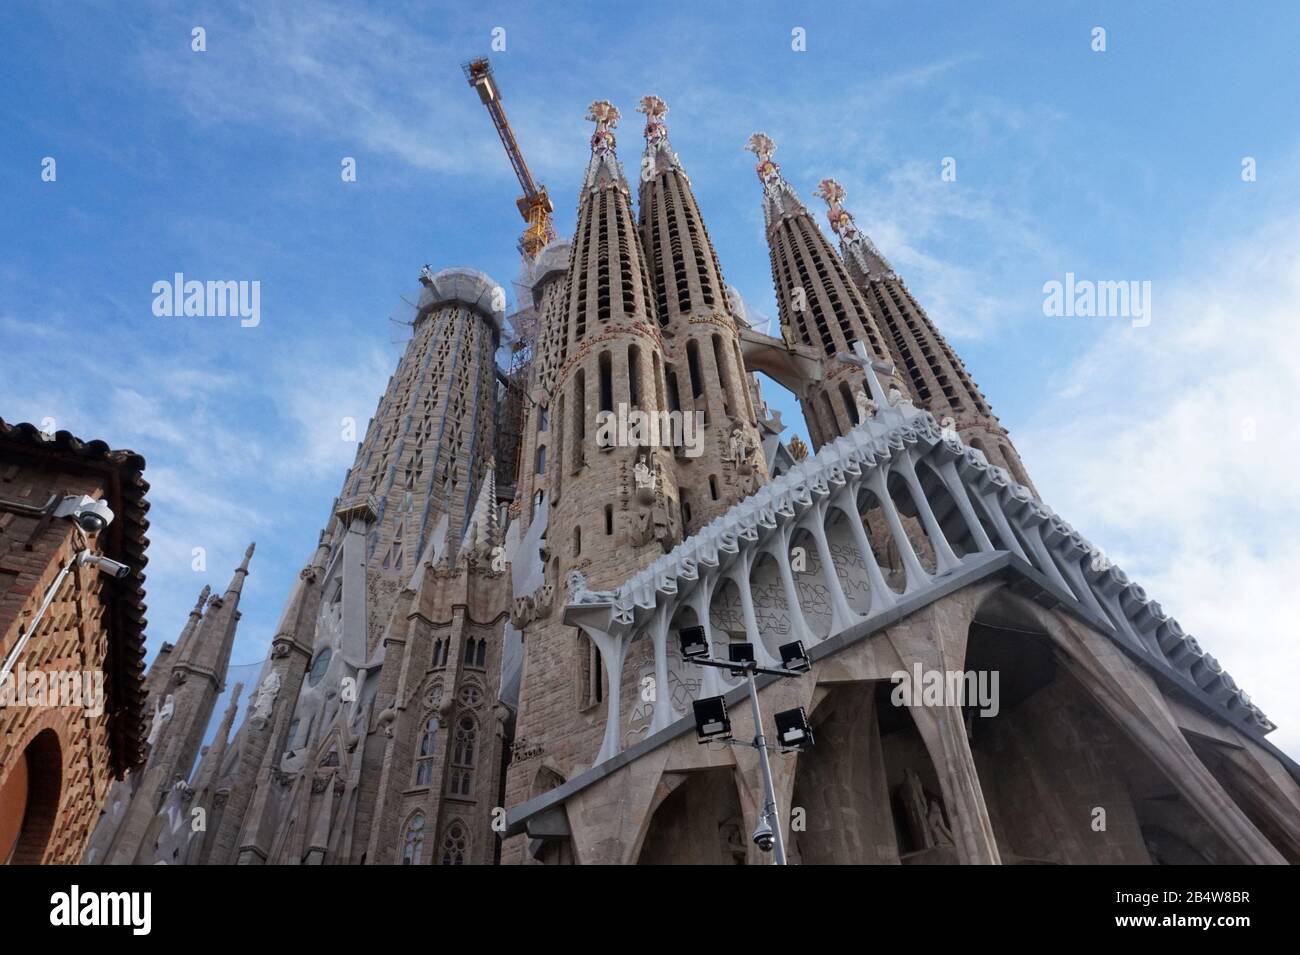 The Passion Facade, Sagrada Familia, Barcelona, Spain Stock Photo - Alamy